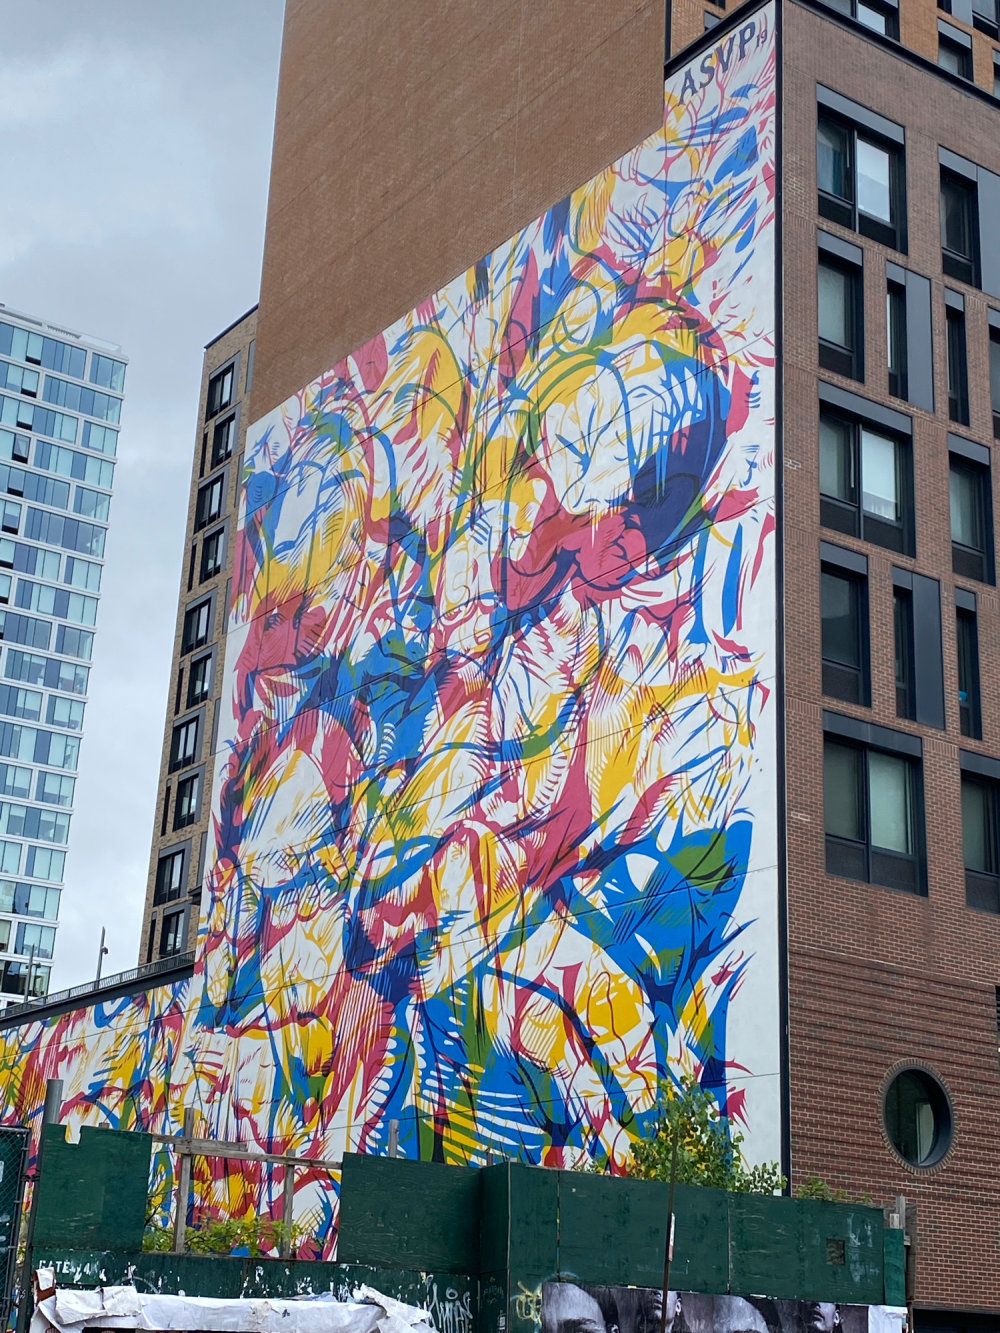 mural in New York by artist ASVP.